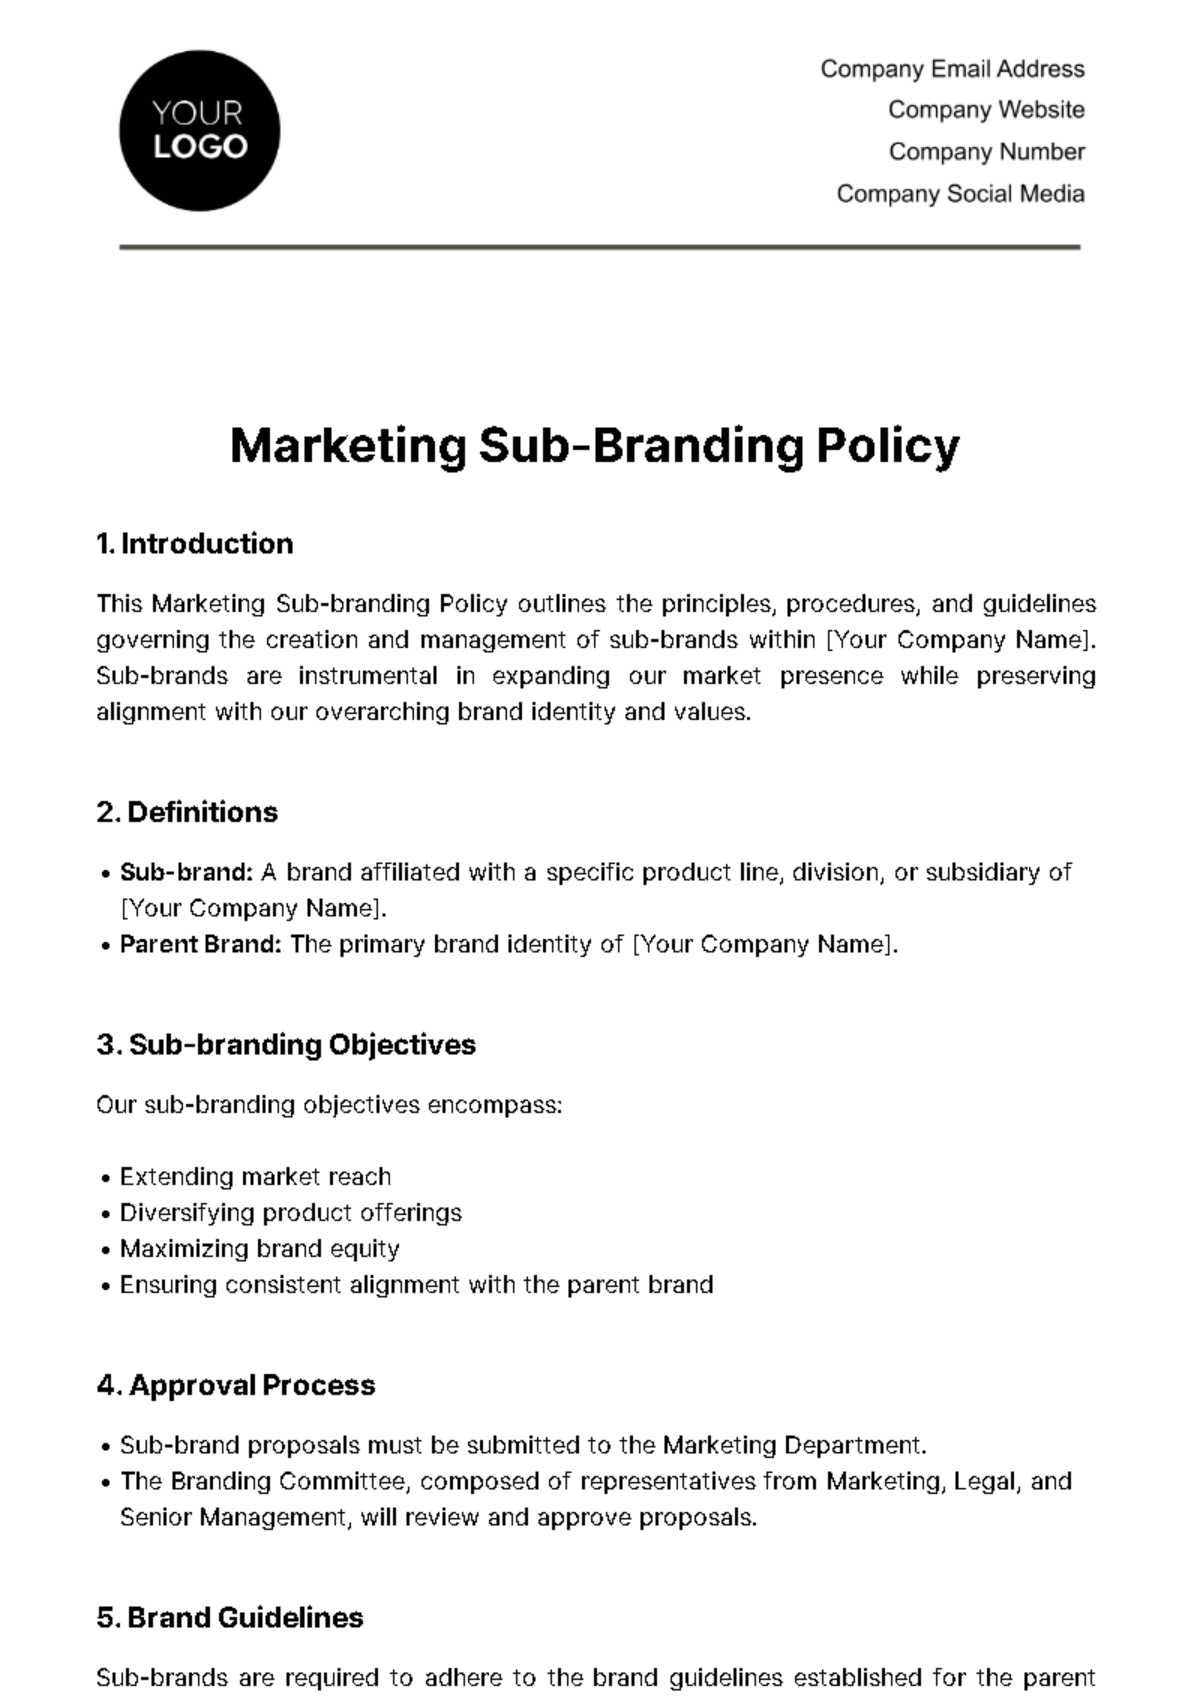 Marketing Sub-branding Policy Template